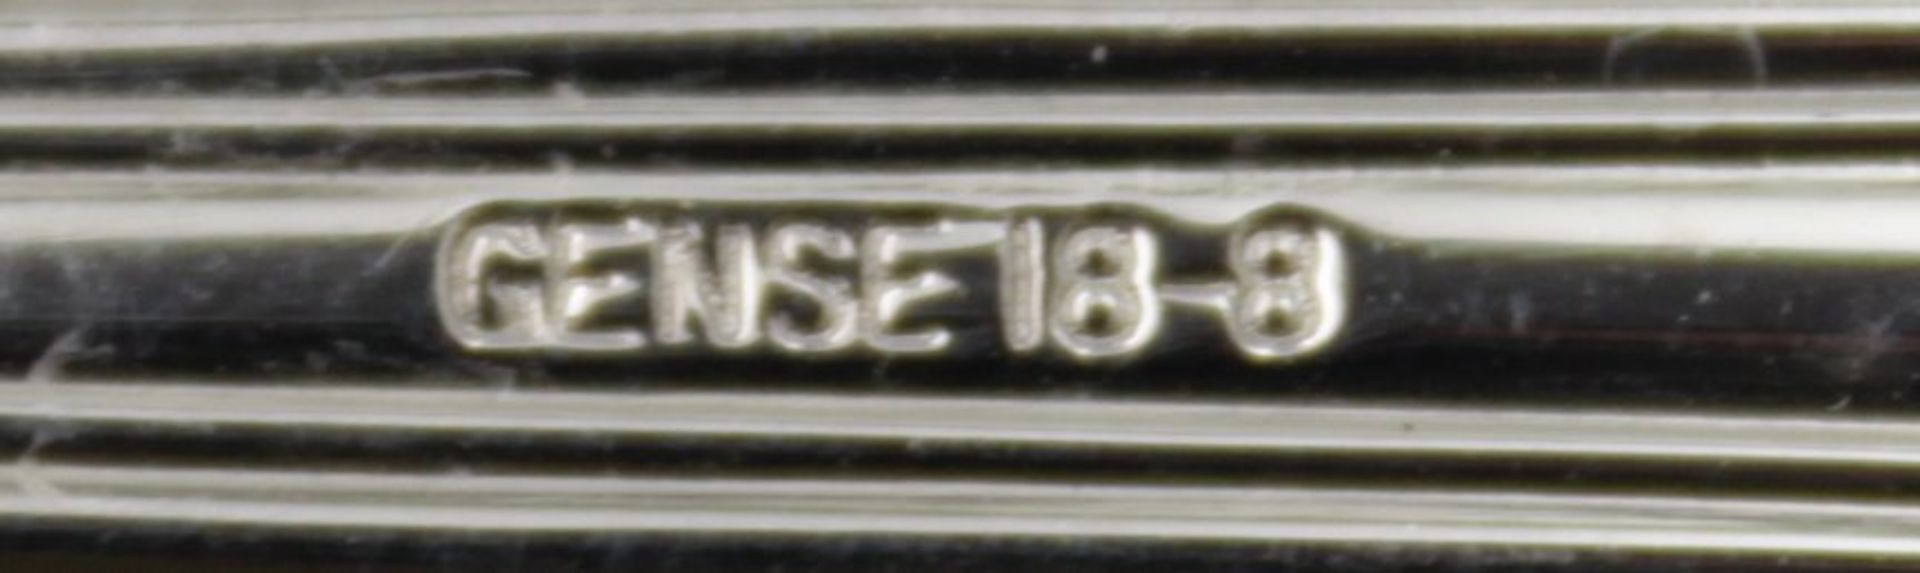 6x Austern-Messer, Edelstahl, ca. L-17,5cm. - Image 4 of 4